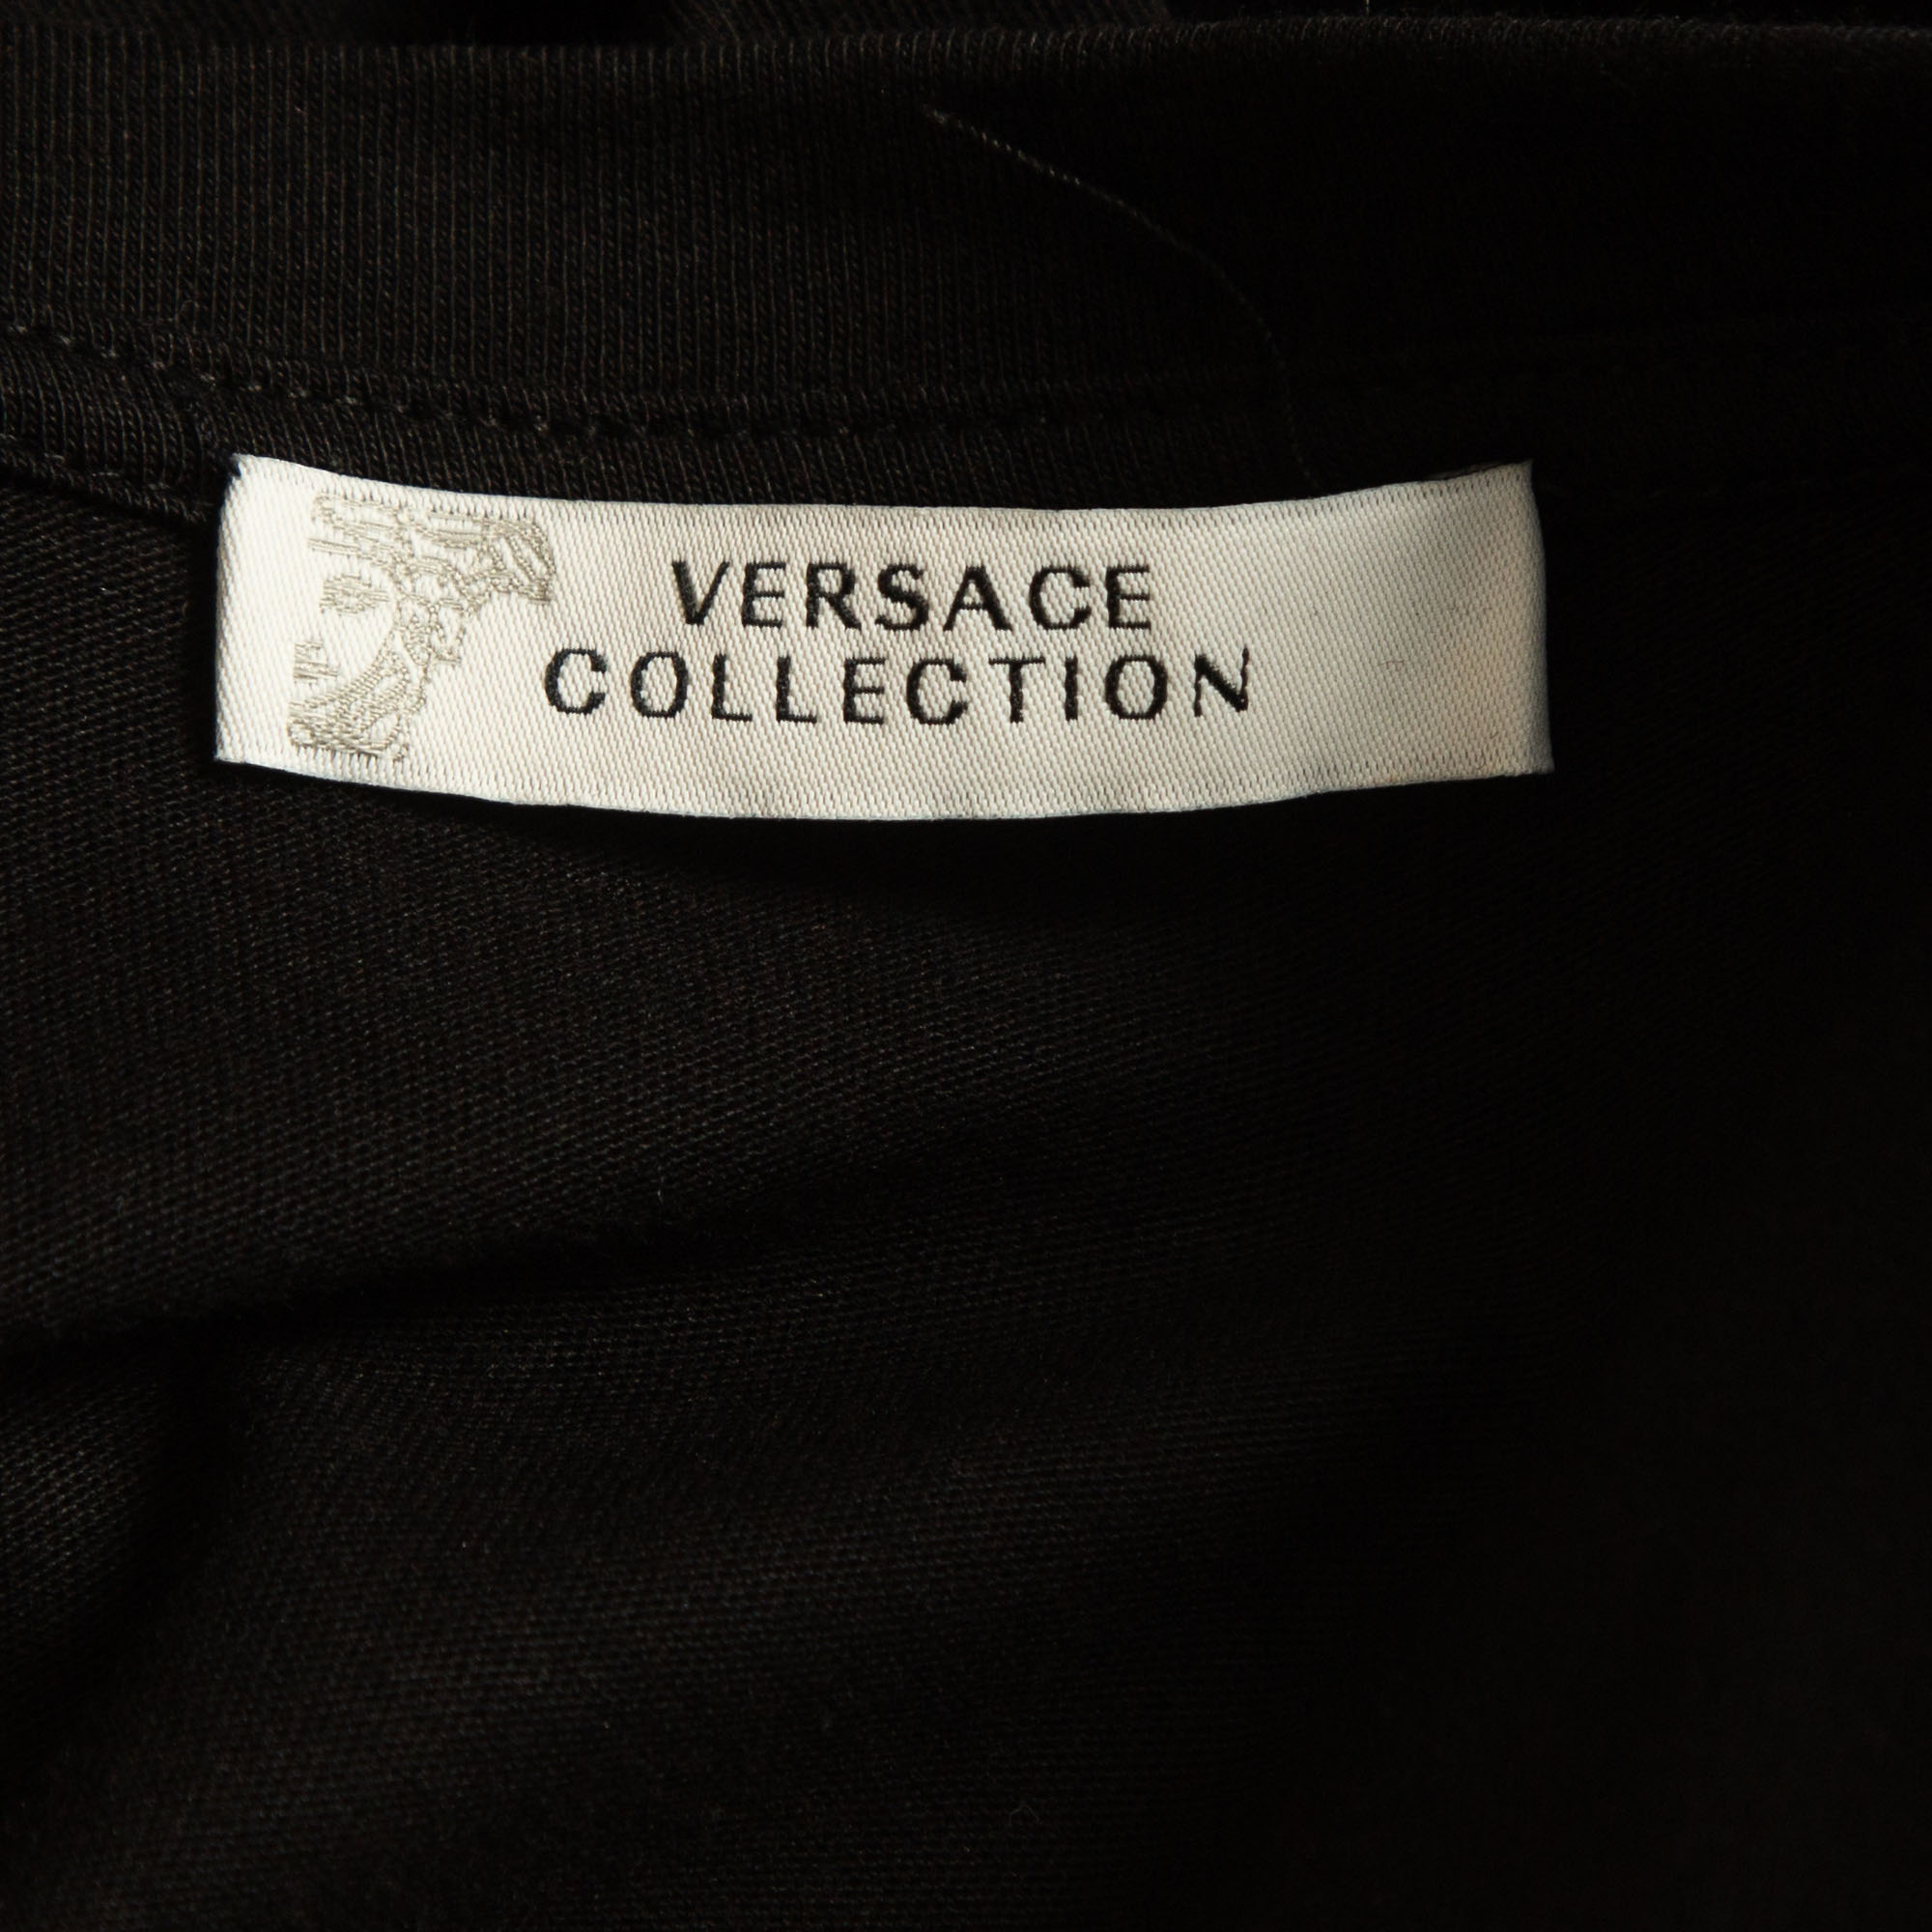 Versace Collection Black Printed Cotton T-Shirt XL